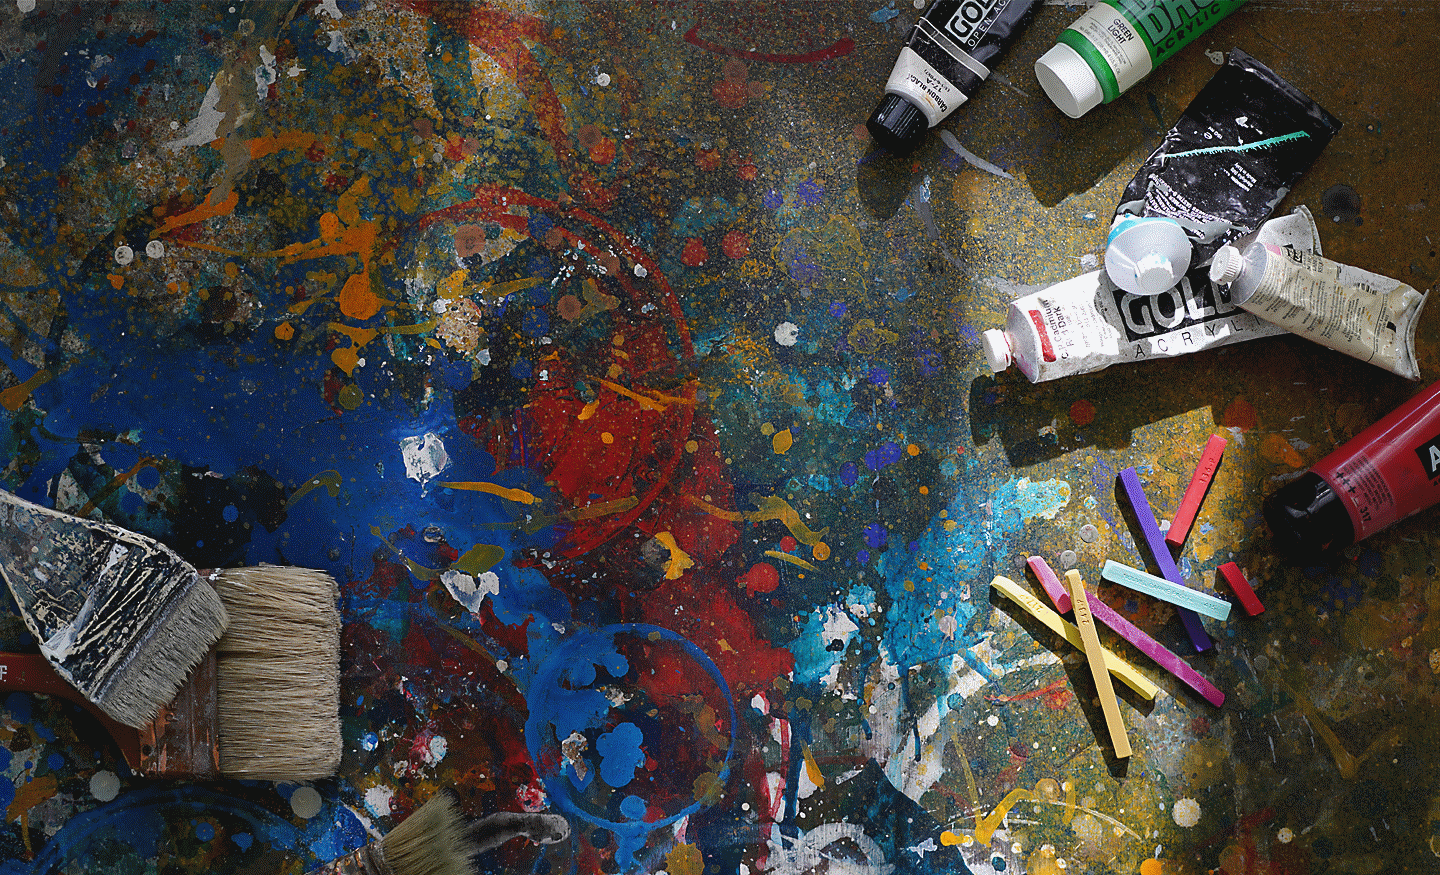 Splatter of paint on floor